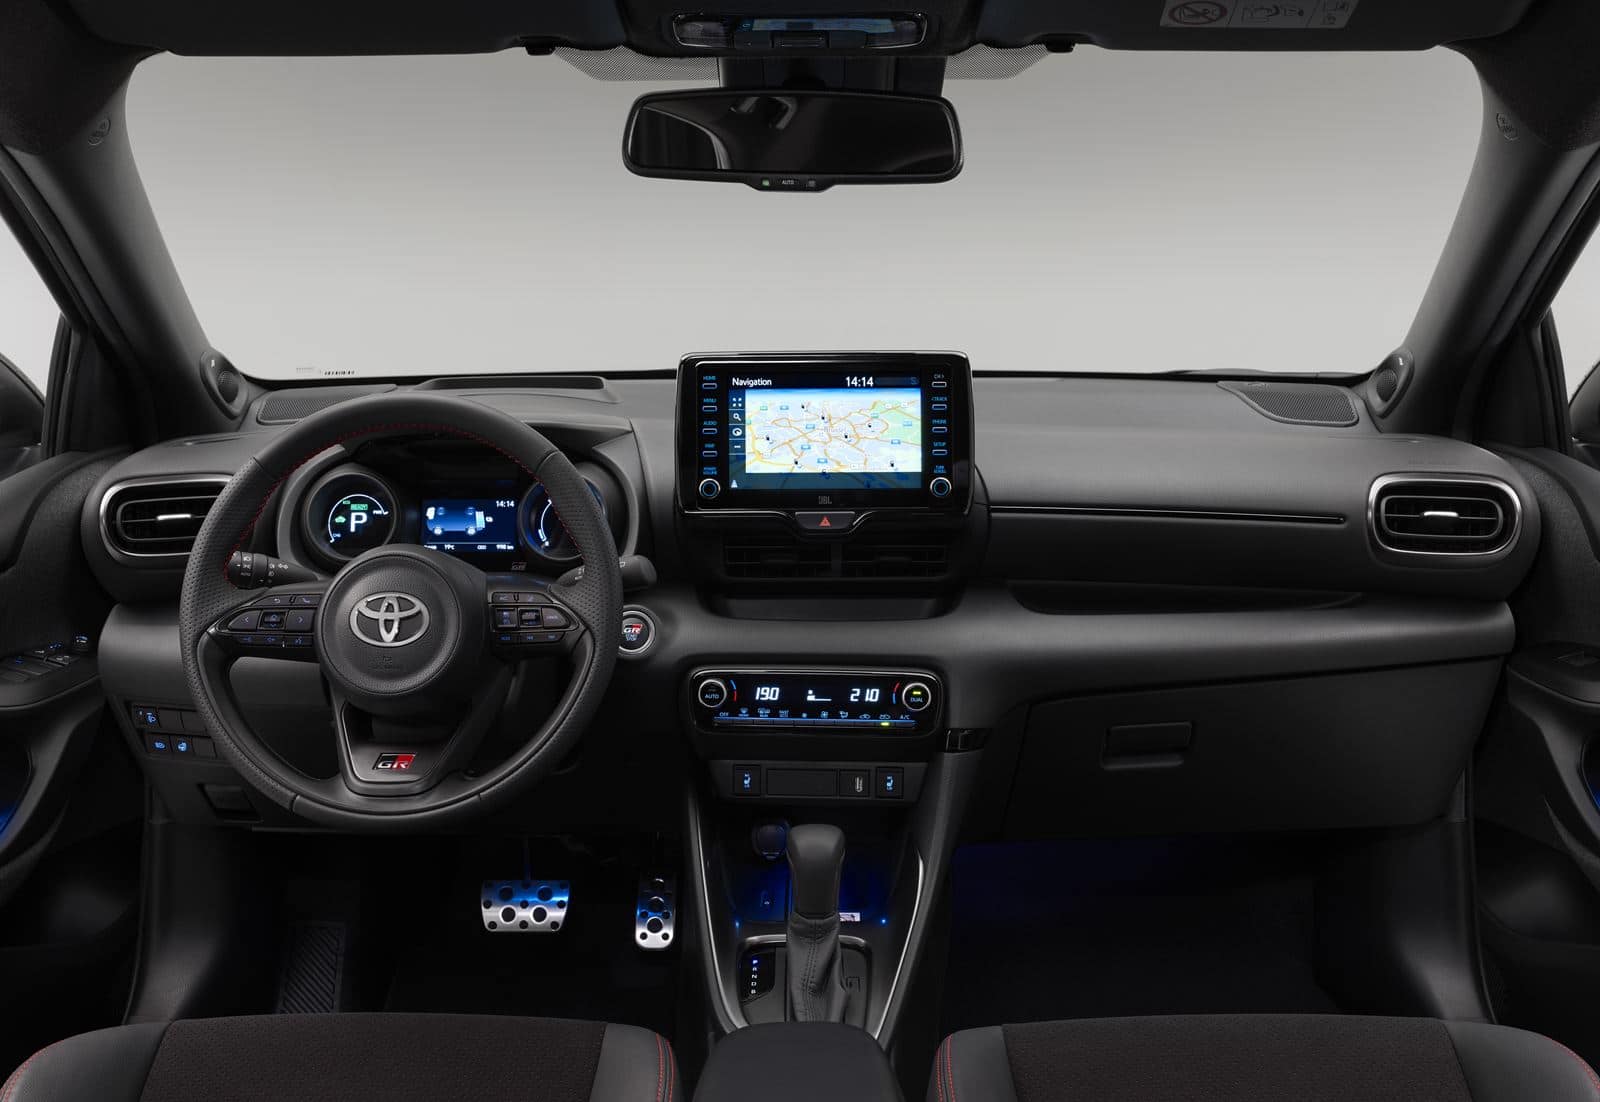 Toyota Yaris GR SPORT interior